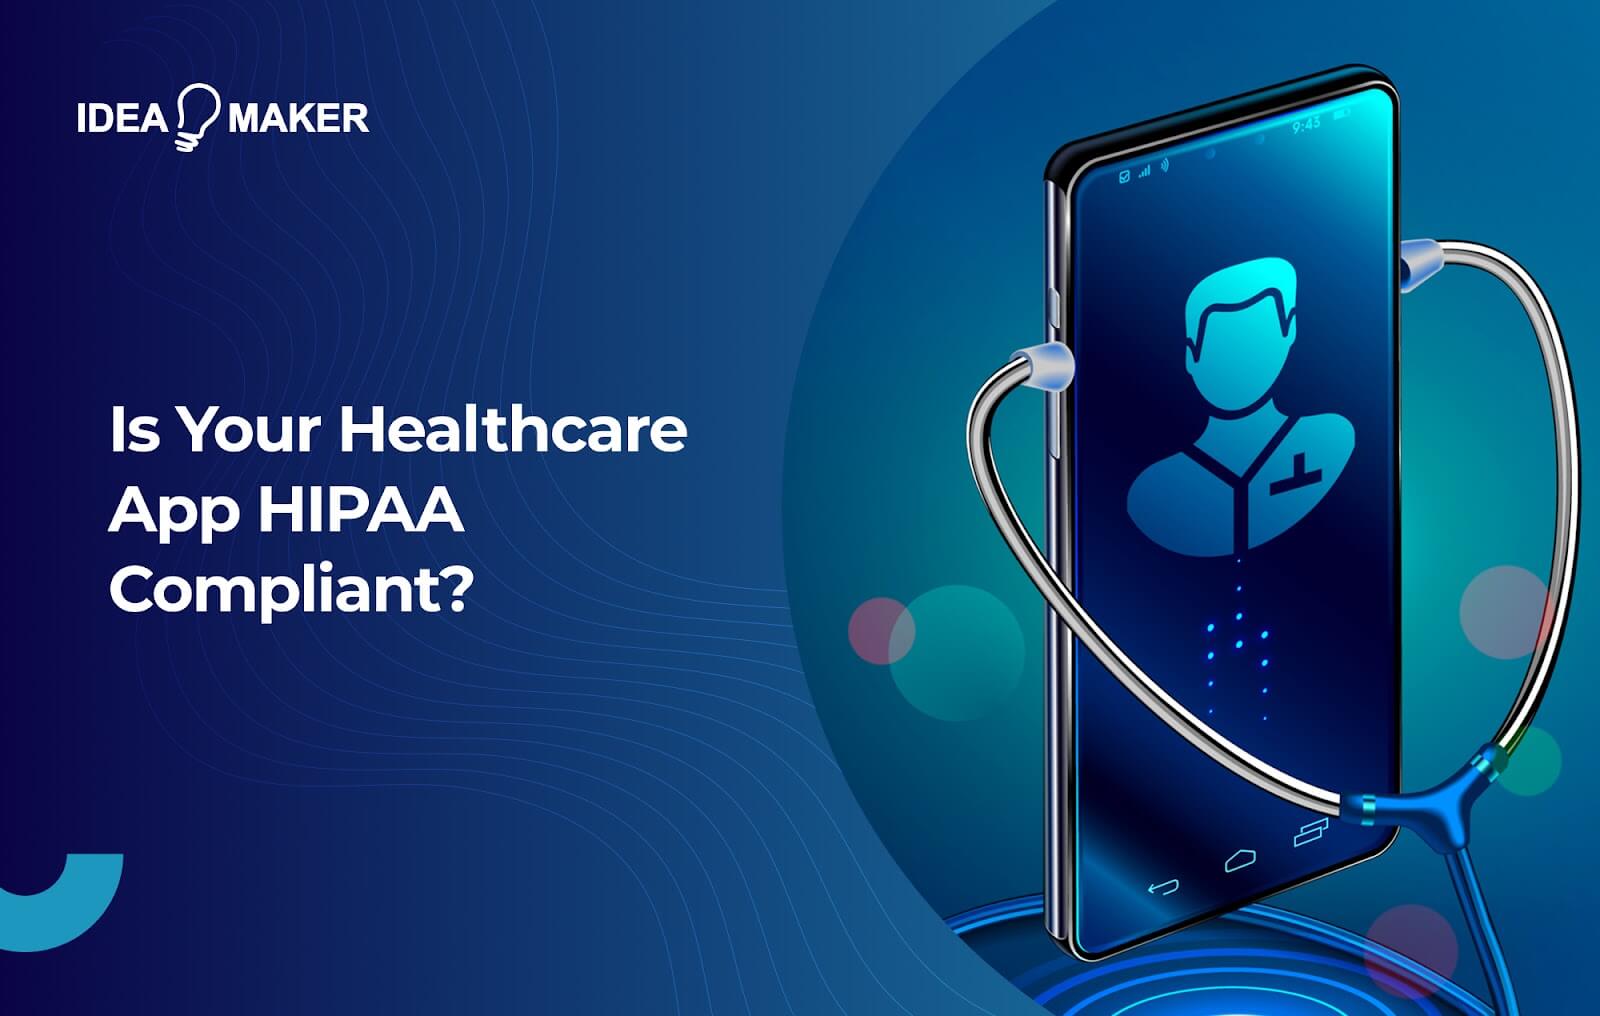 Ideamaker - Is Your Healthcare App HIPAA Compliant